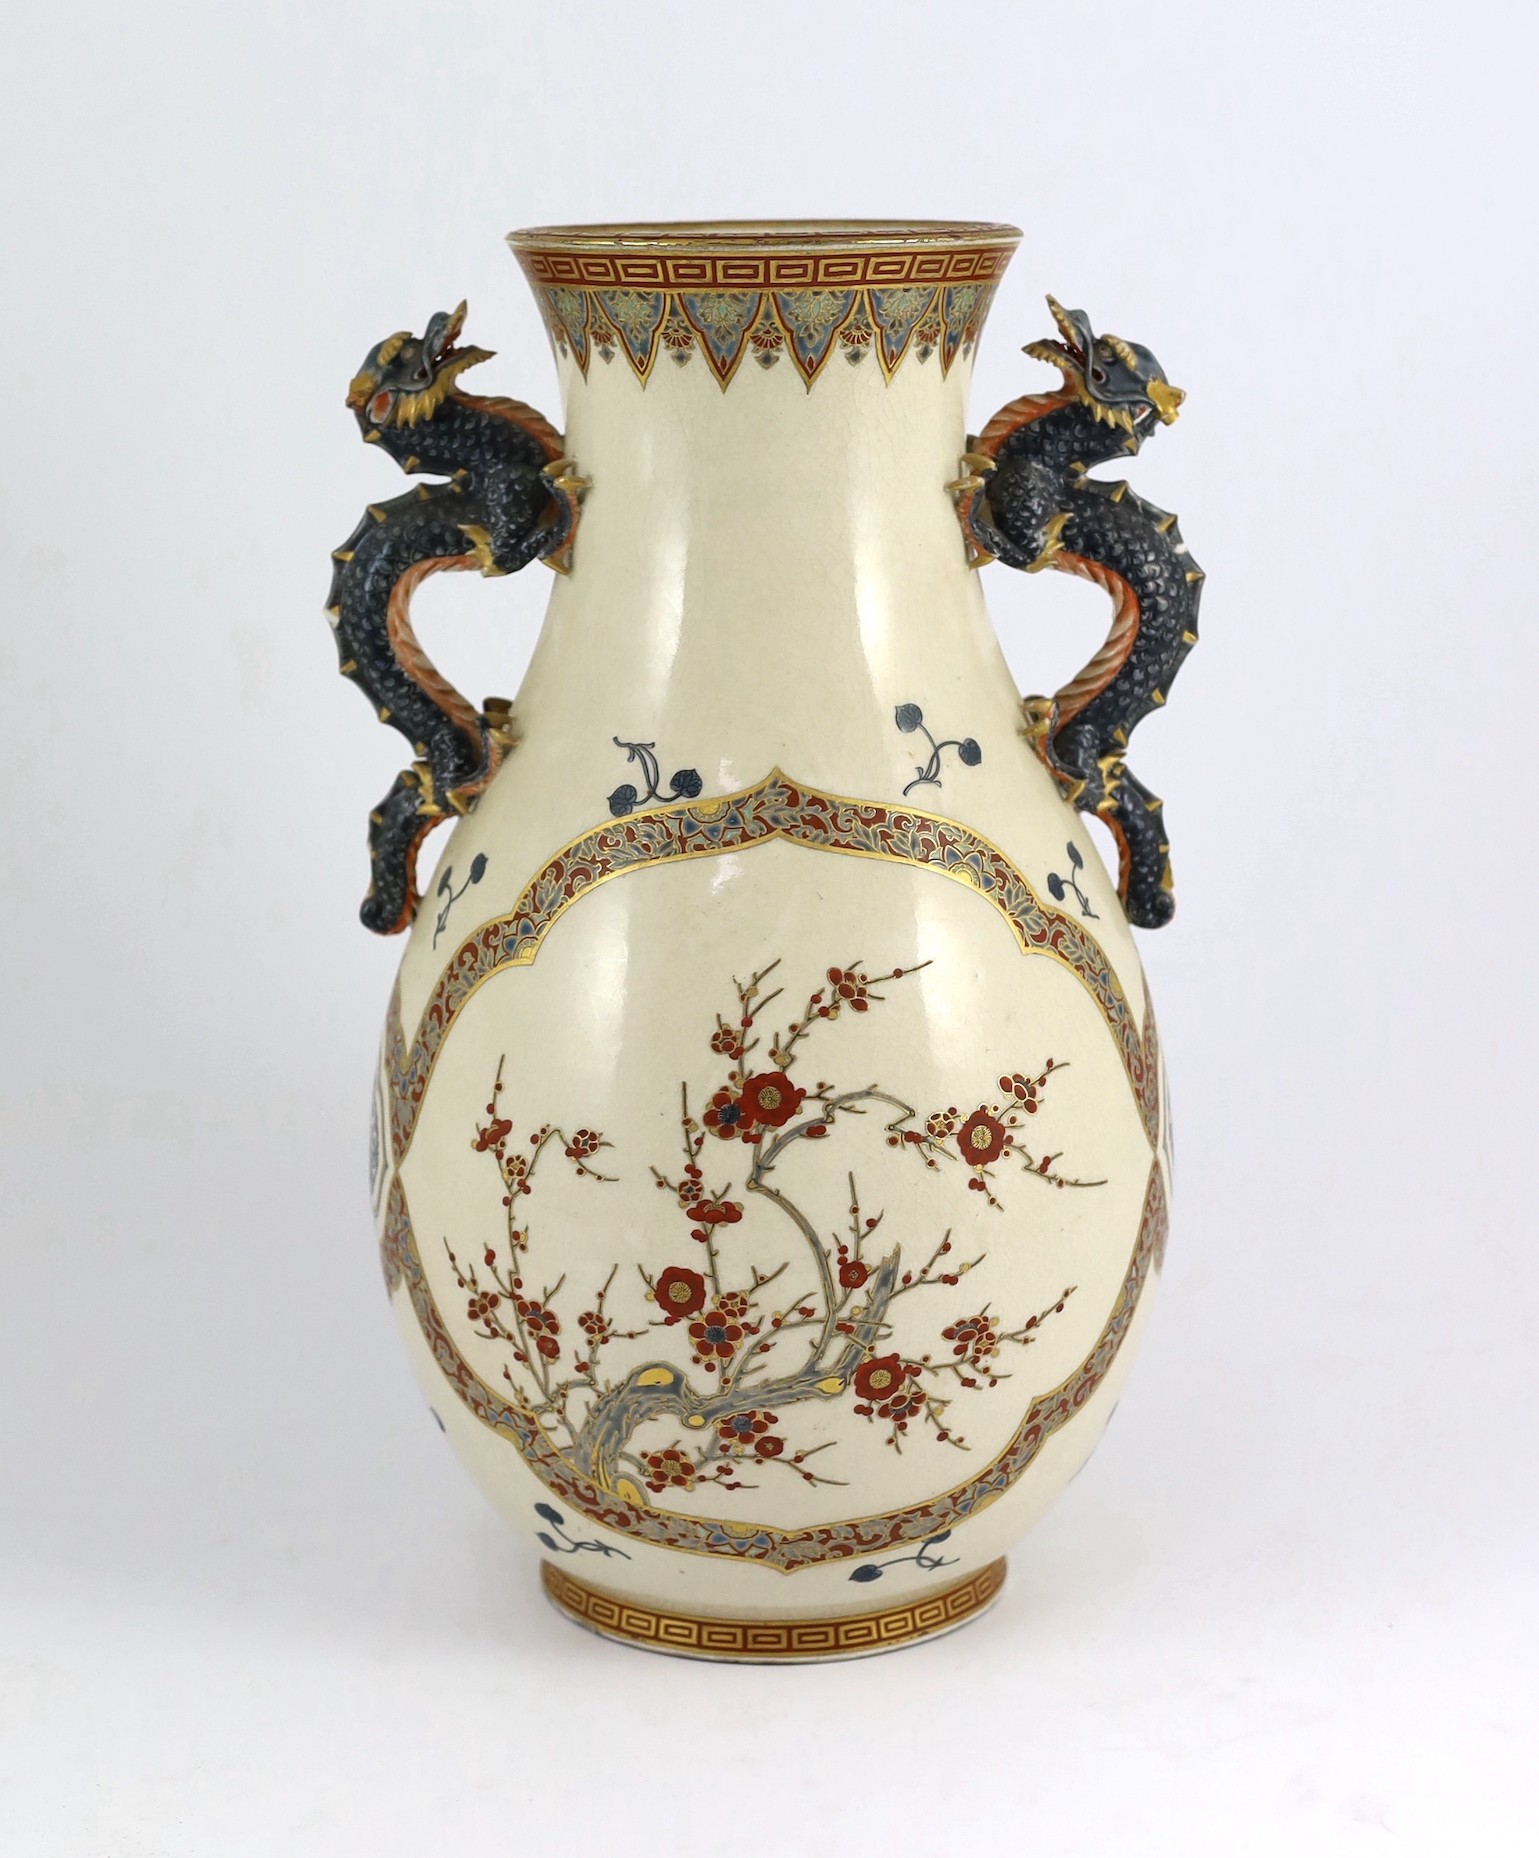 A large Japanese Satsuma pottery vase, late 19th century, 33.5cm, some damage to handles